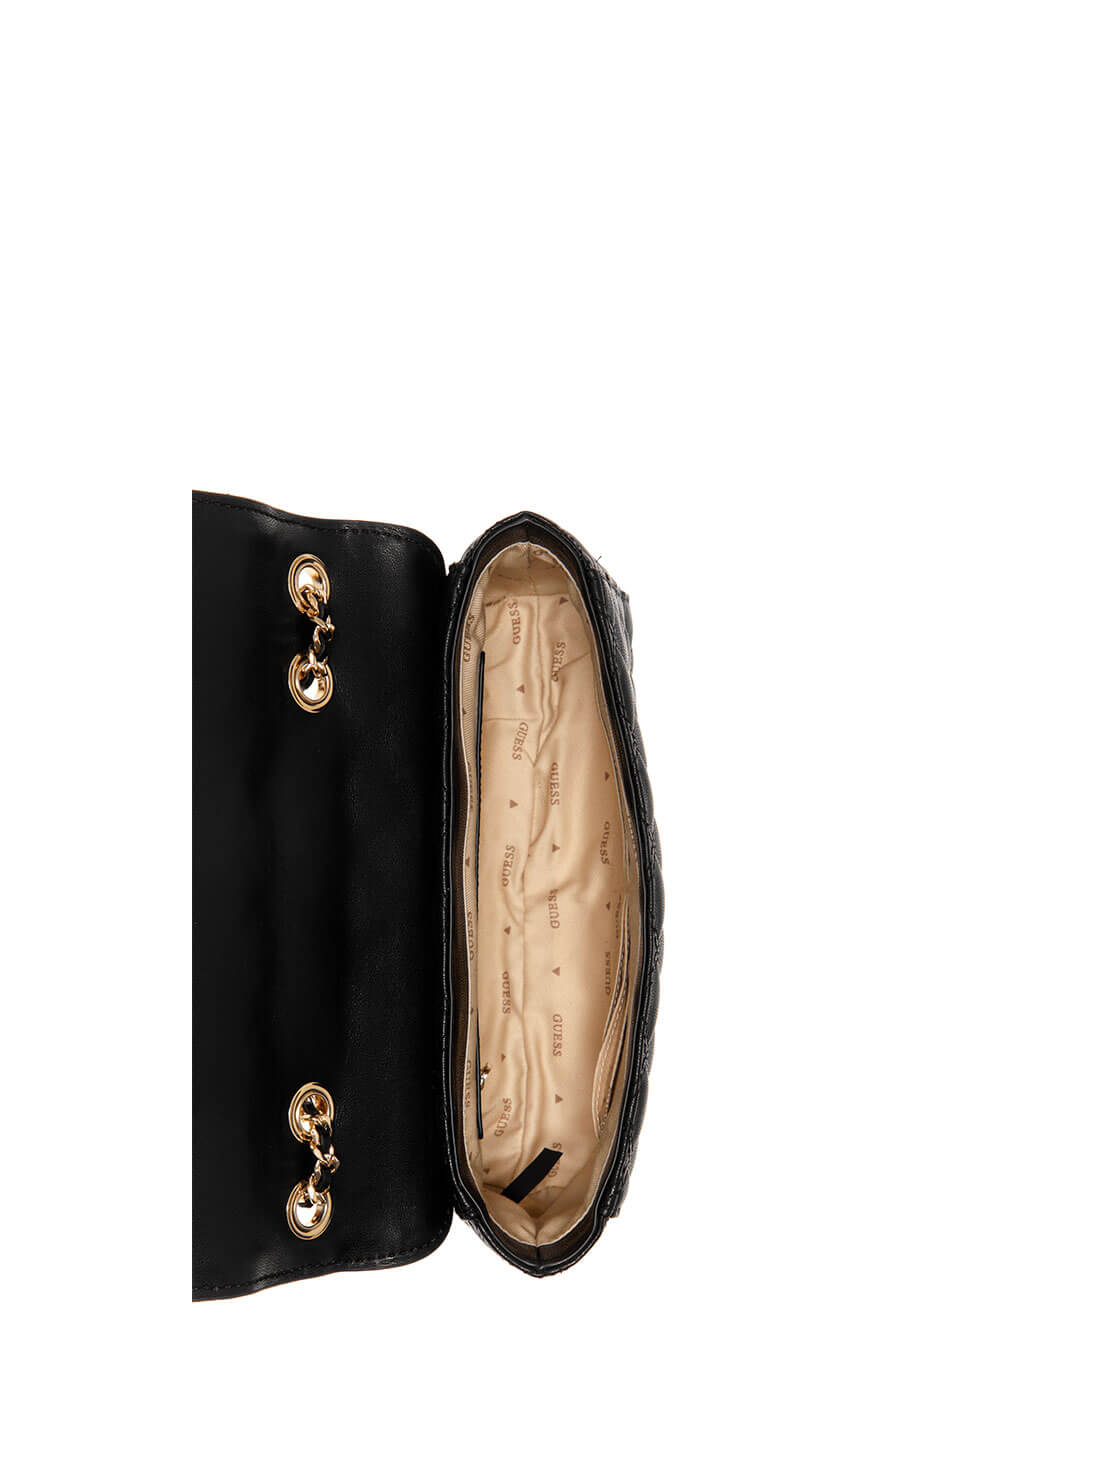 Black Kai Convertible Crossbody Bag | GUESS Women's Handbags | inside view